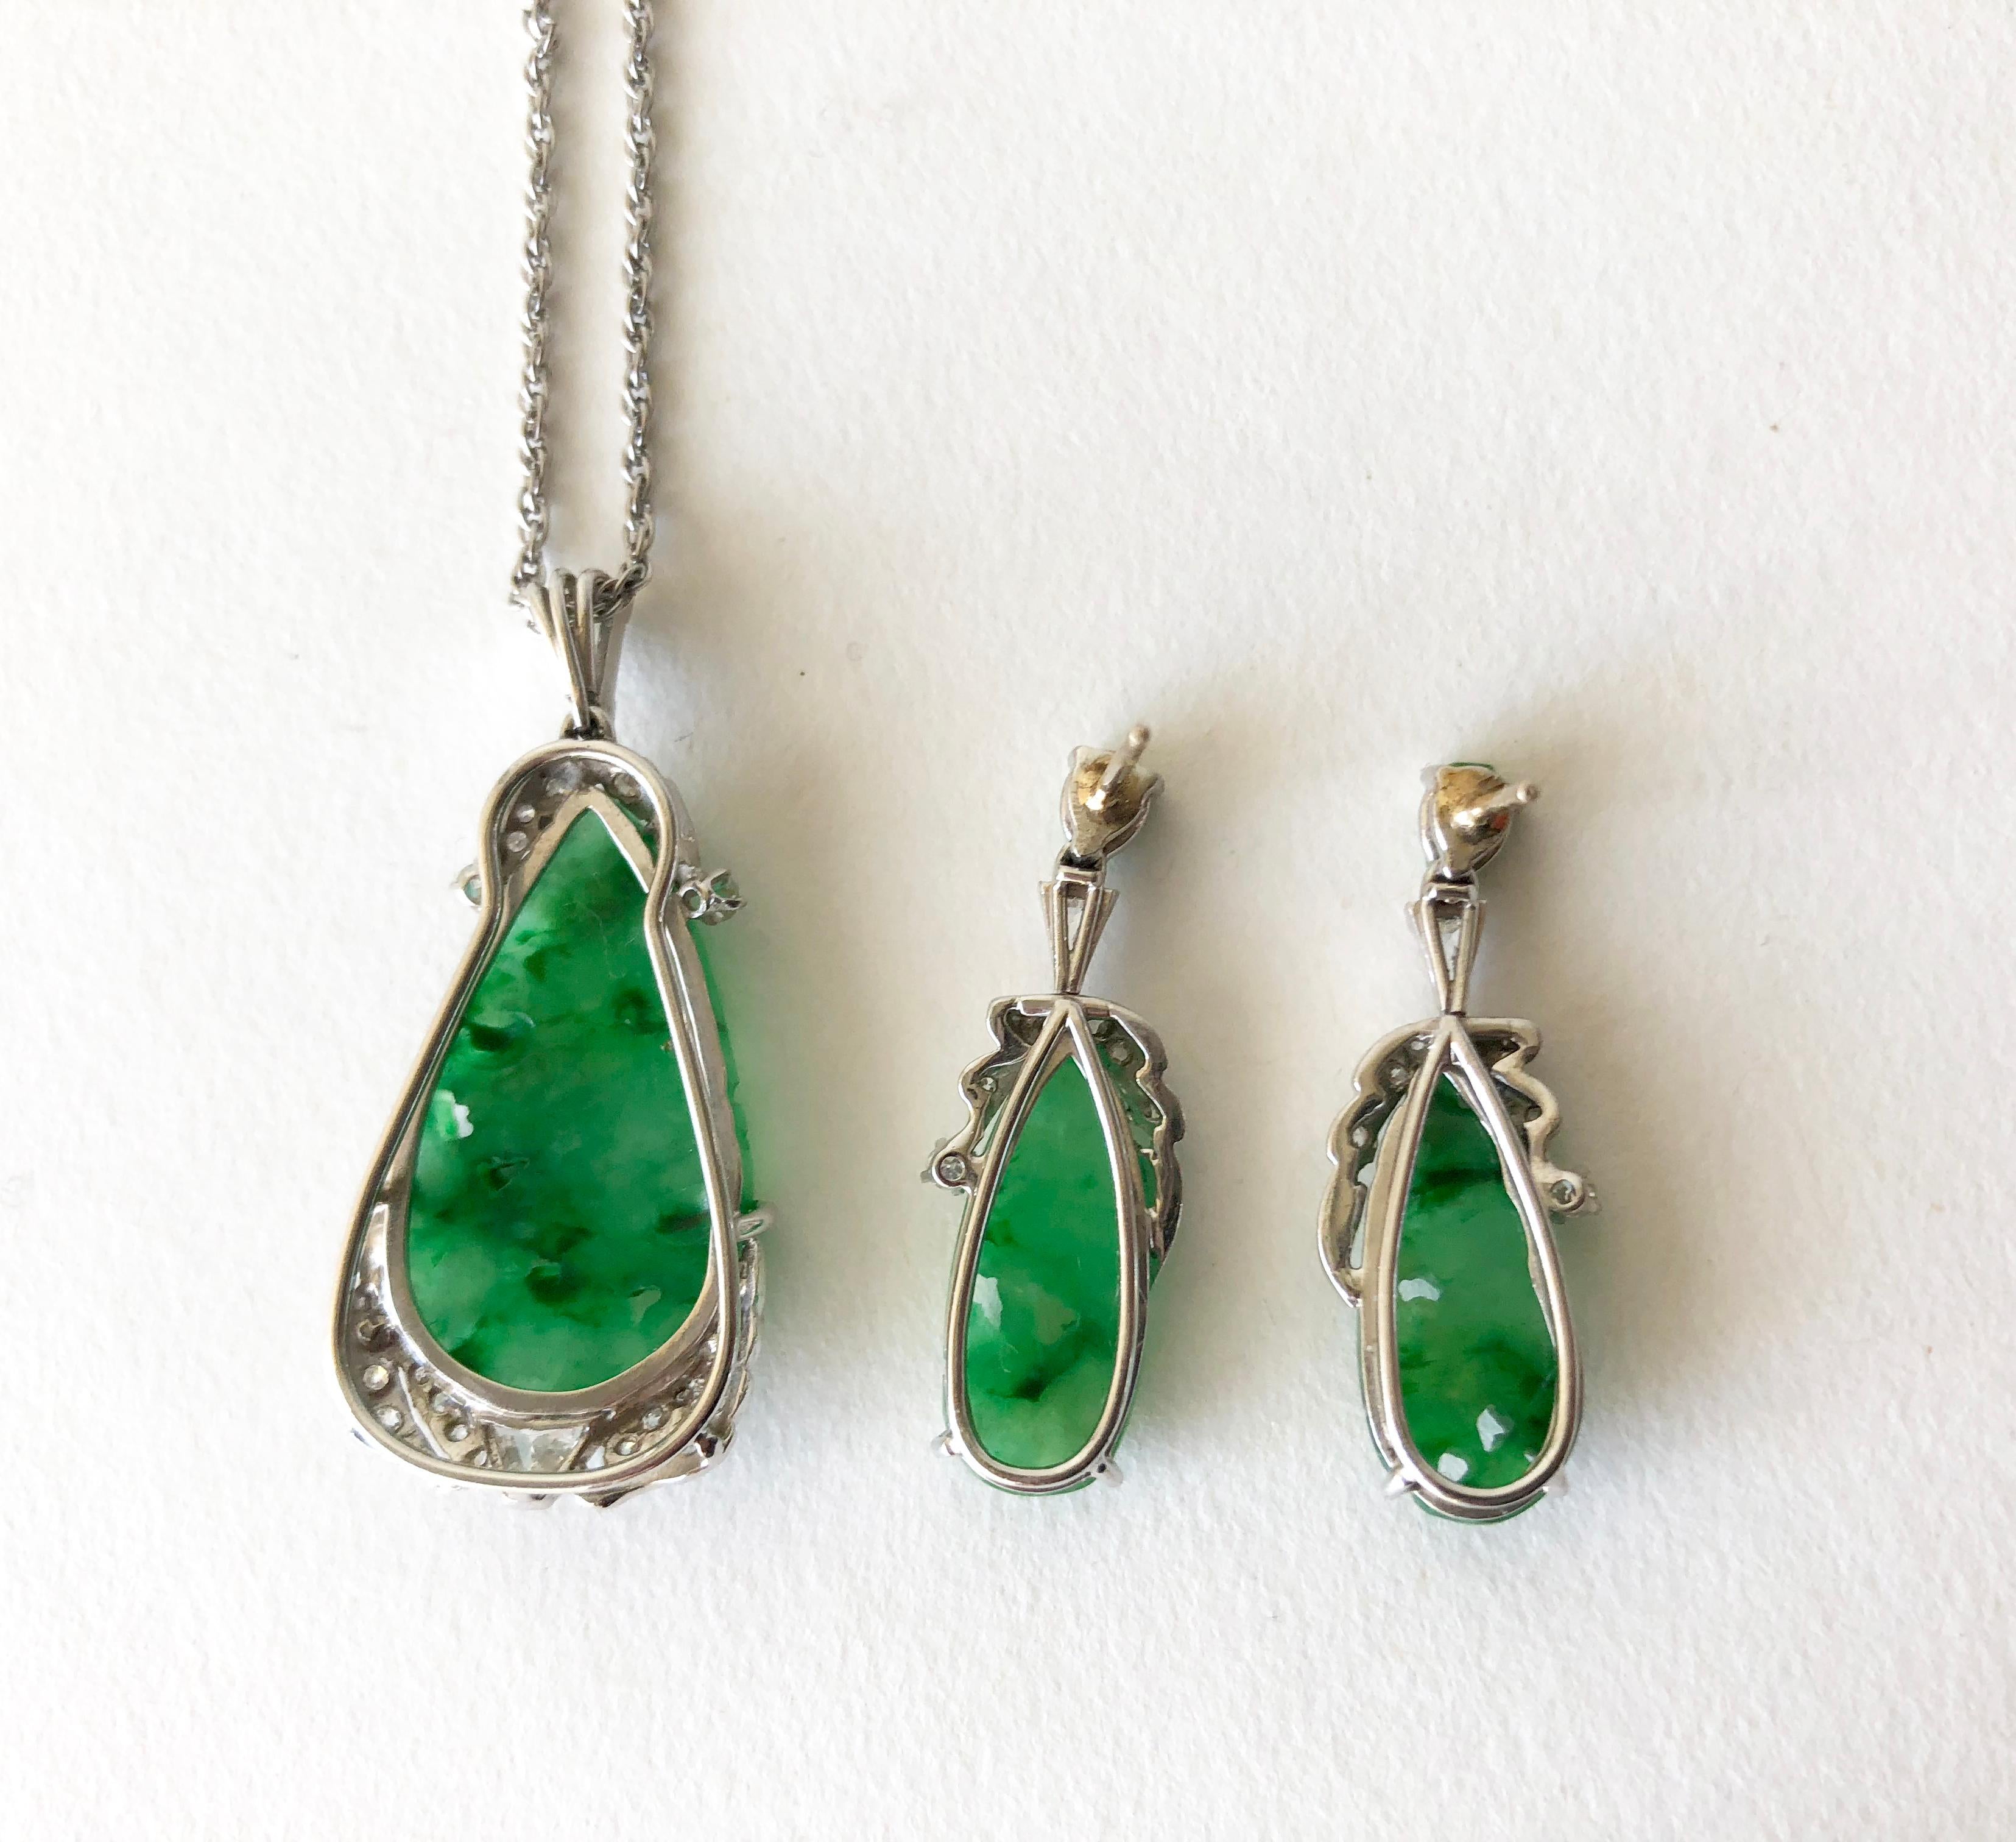 Modernist 1950s White Gold Diamond Carved Jade Necklace Earrings Set